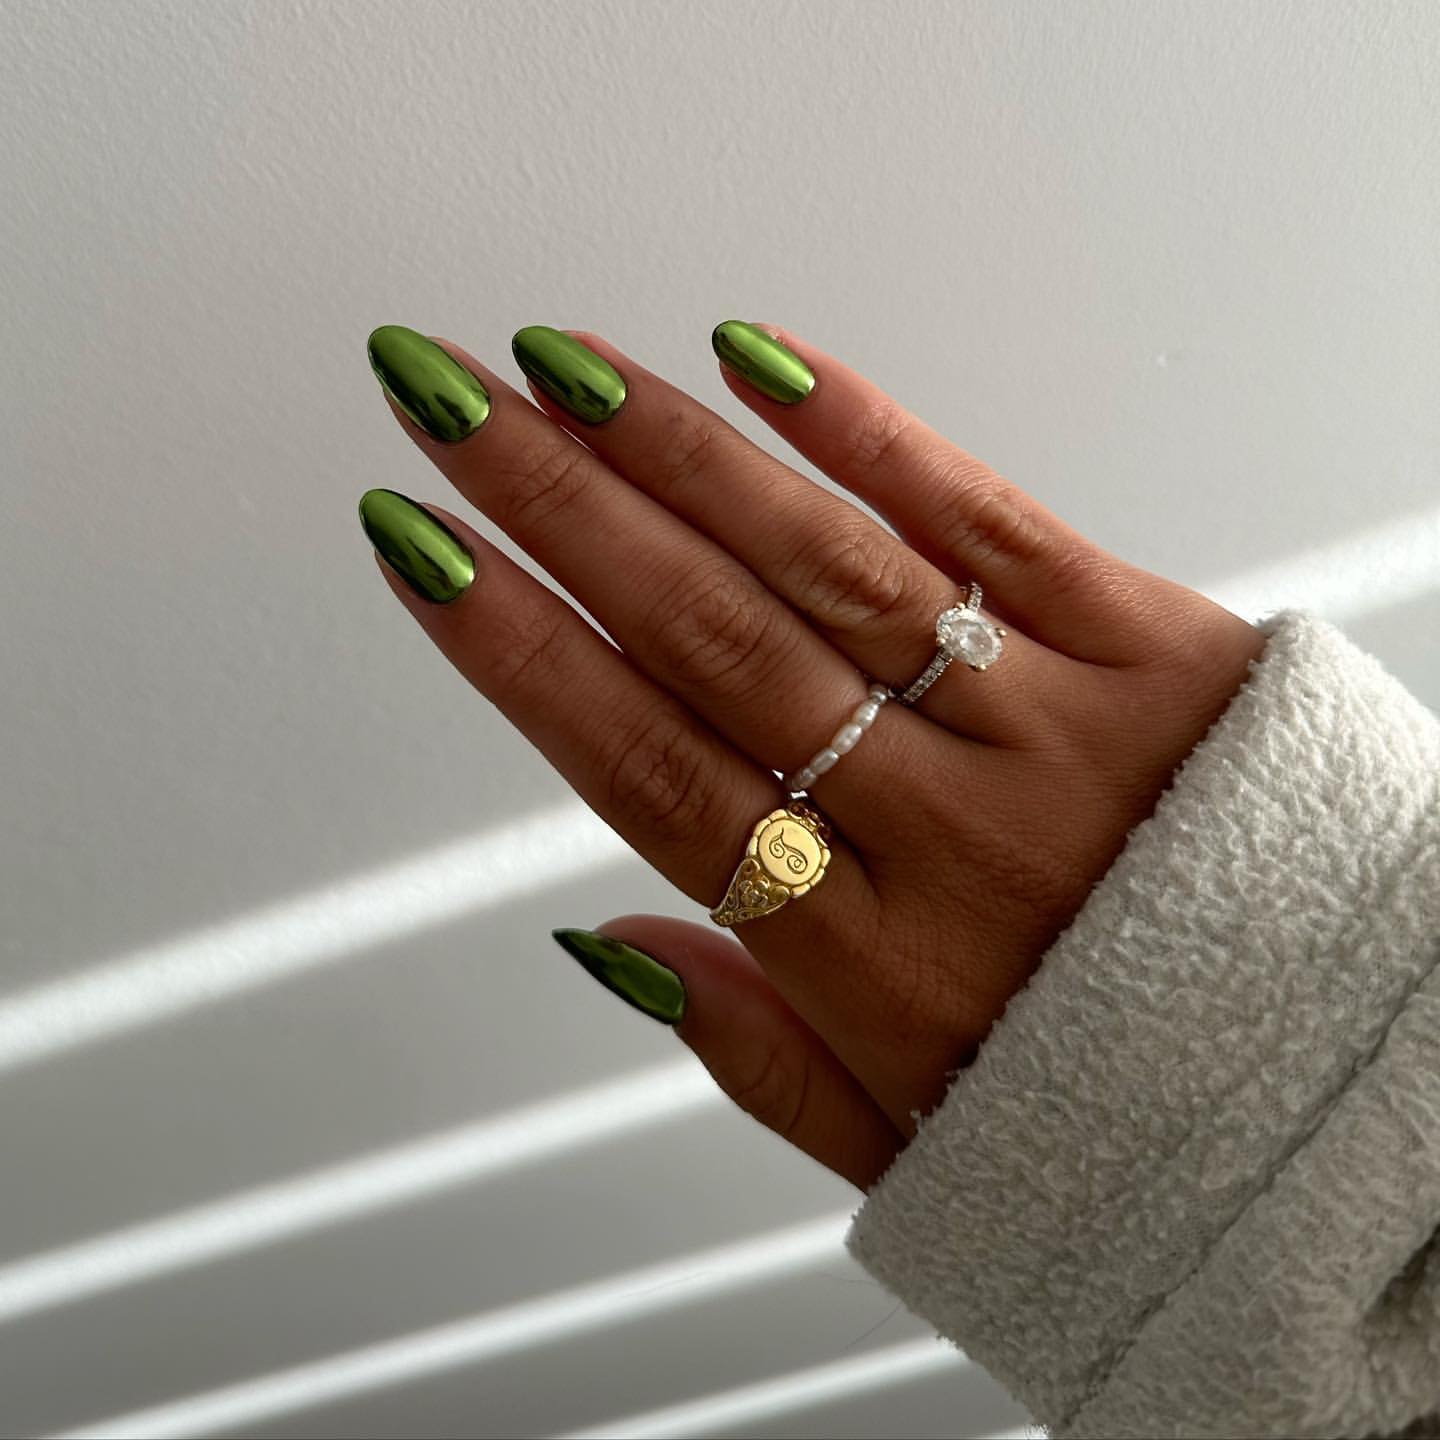 Chrome Green Christmas Nails